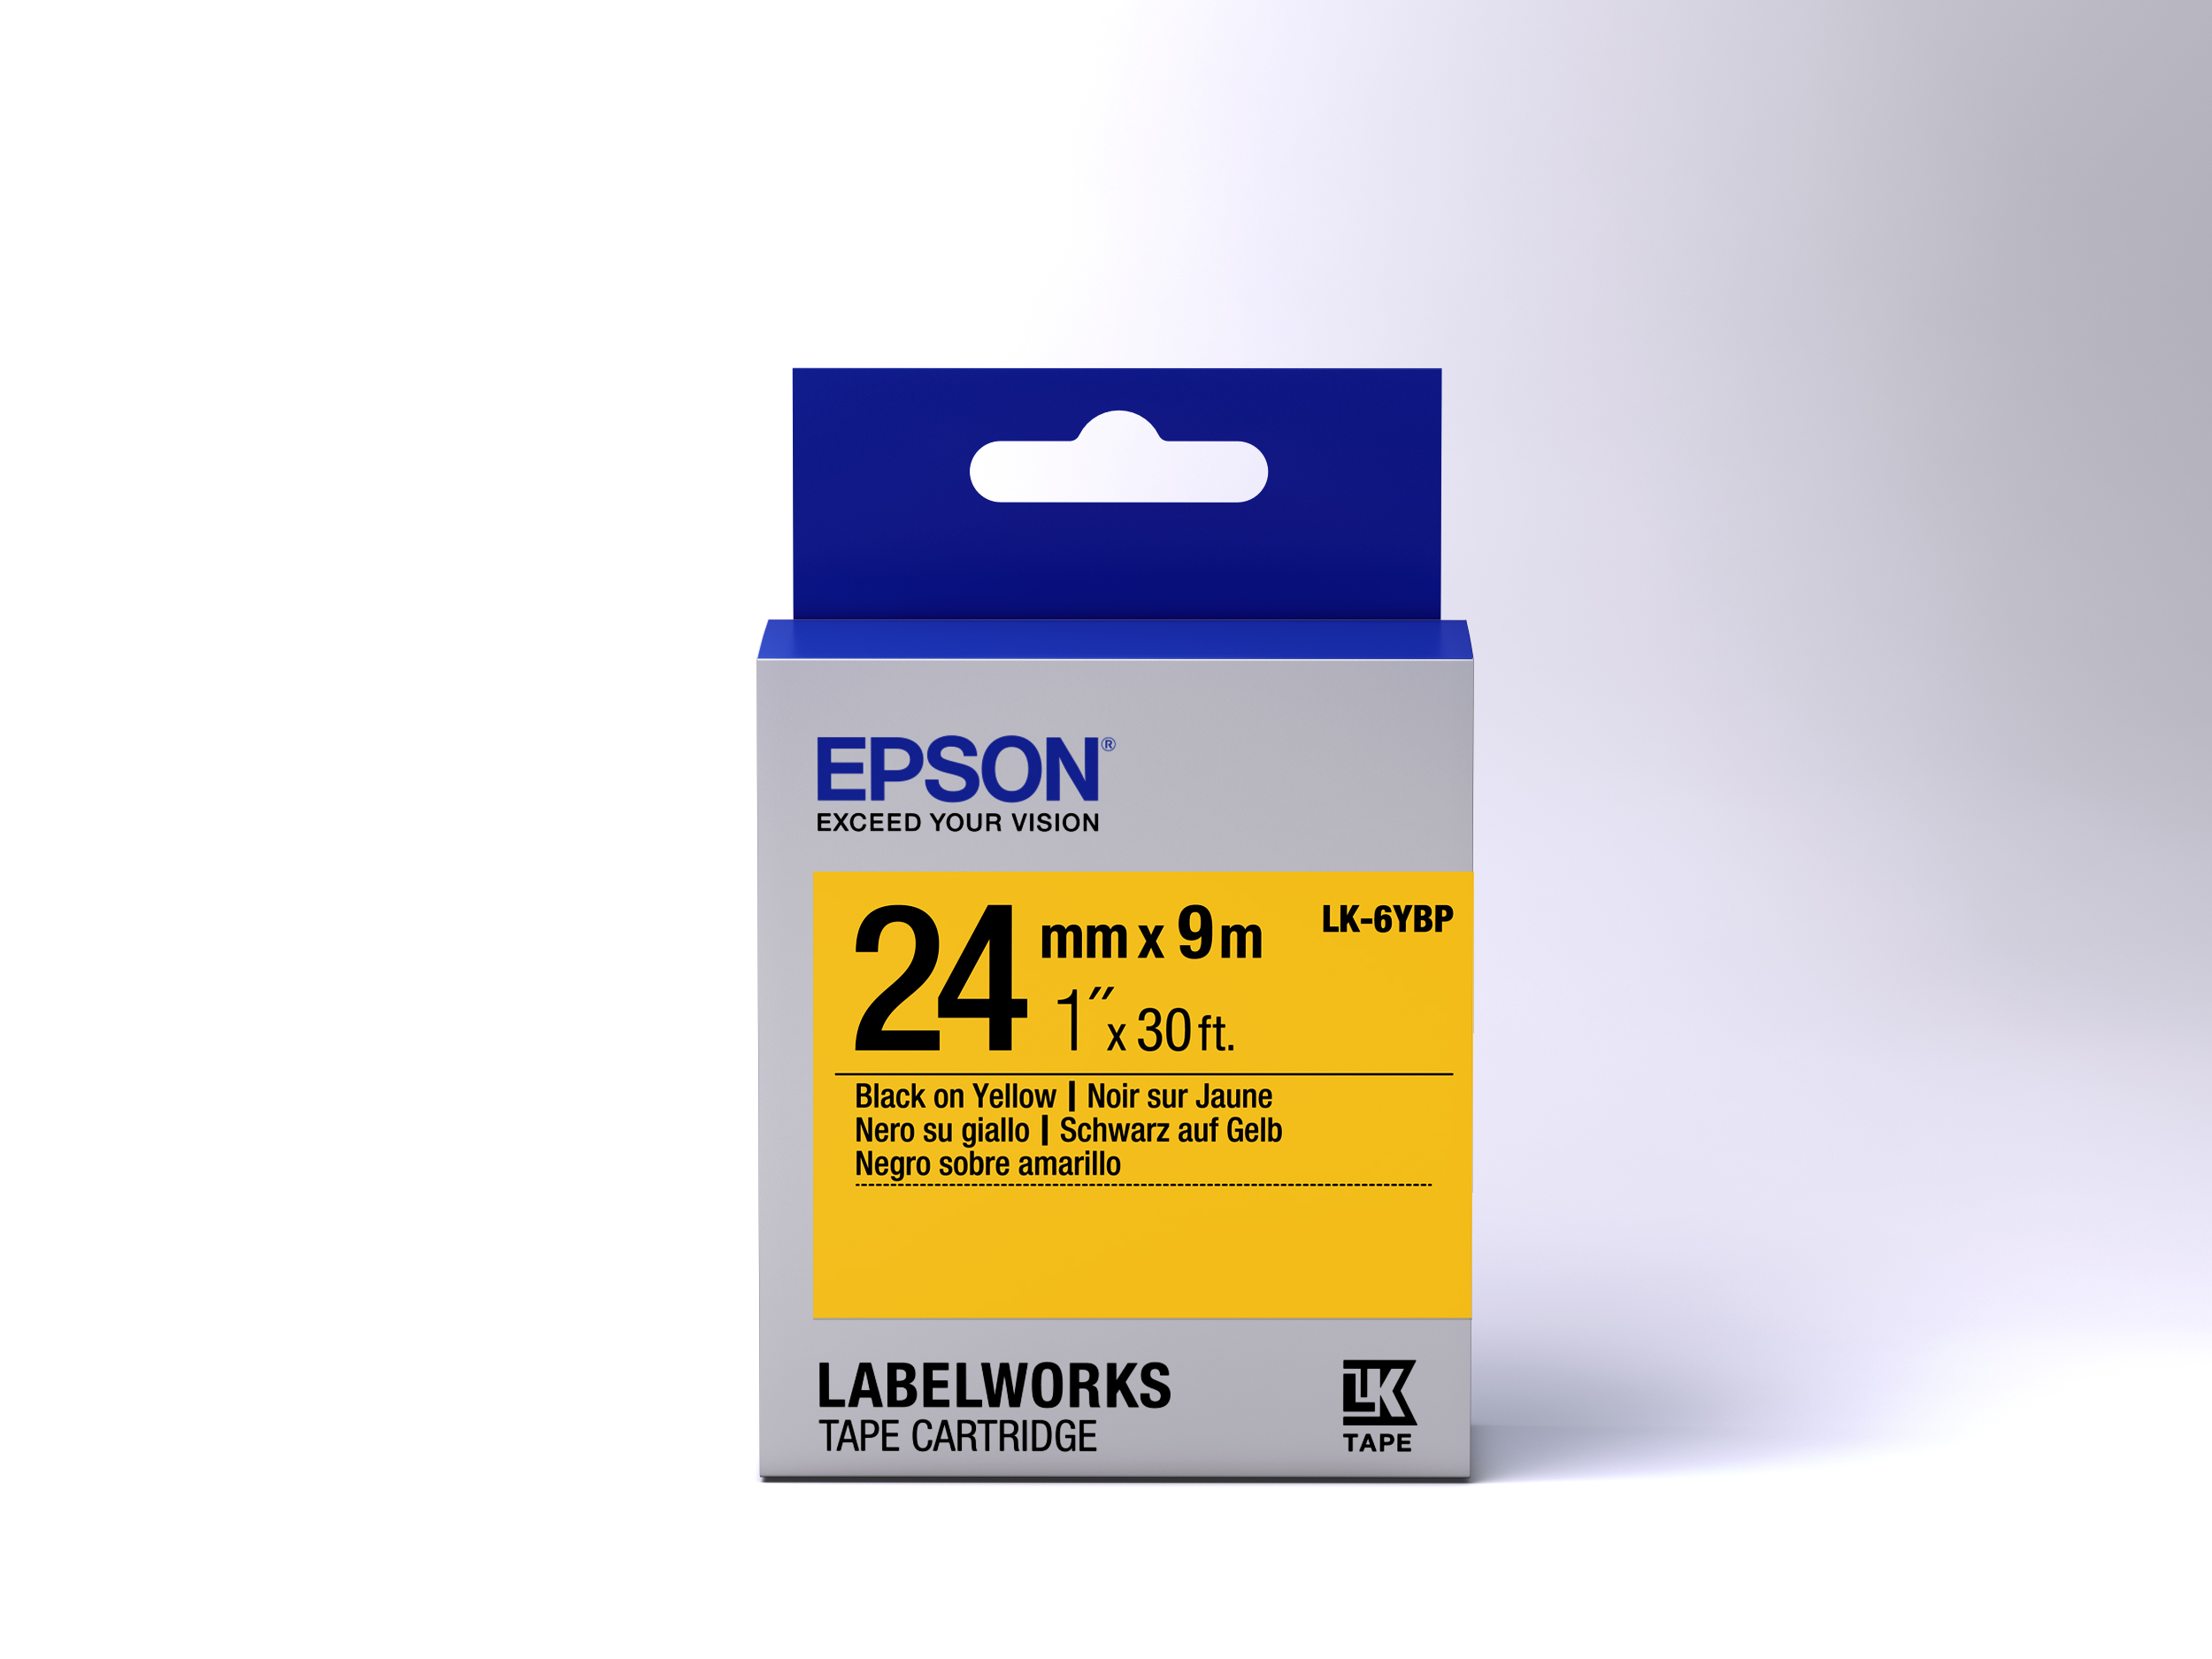 EPSON Paper Label LK-6YBP